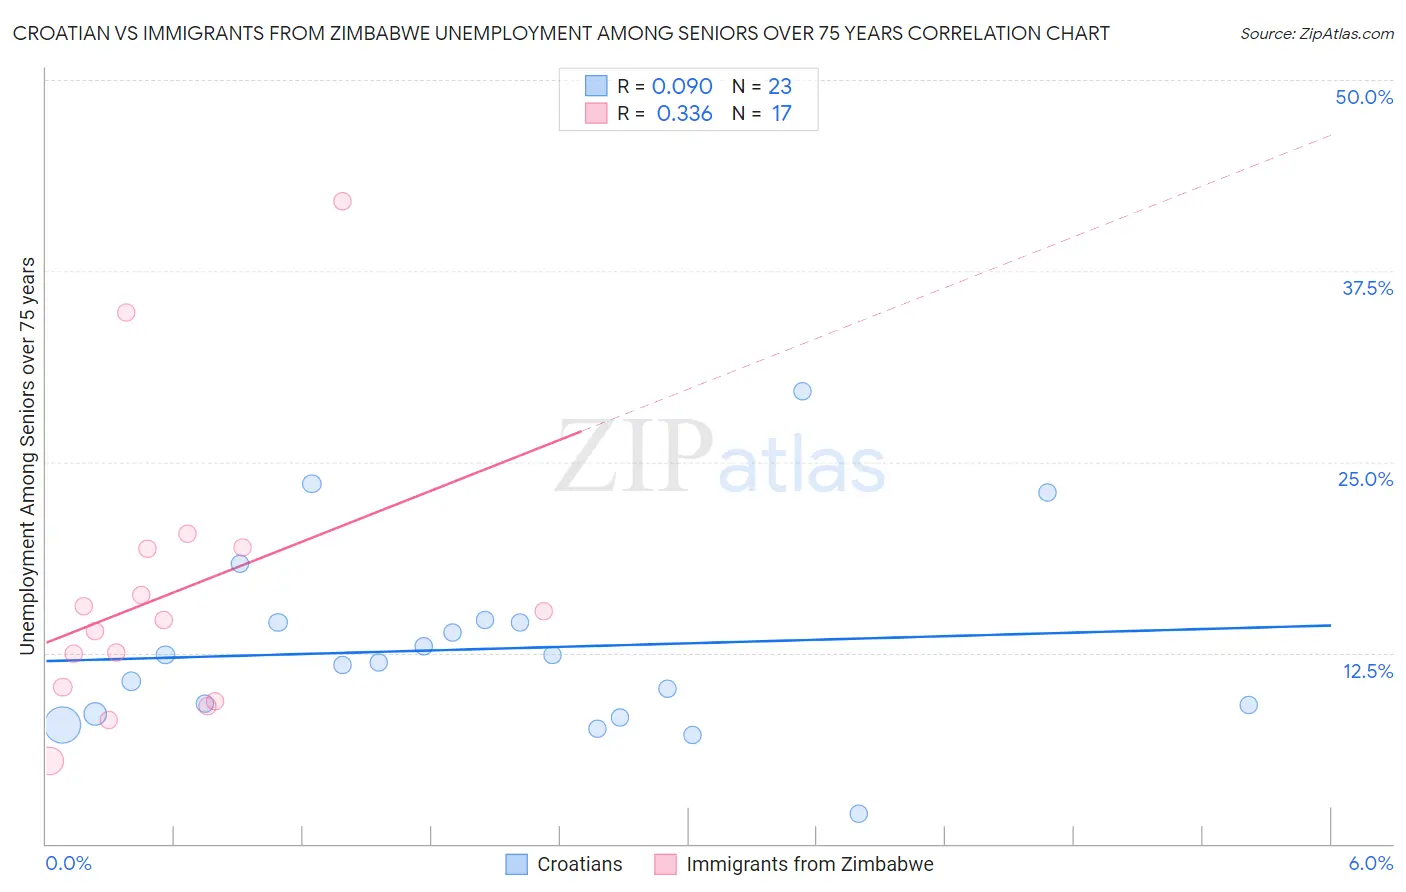 Croatian vs Immigrants from Zimbabwe Unemployment Among Seniors over 75 years